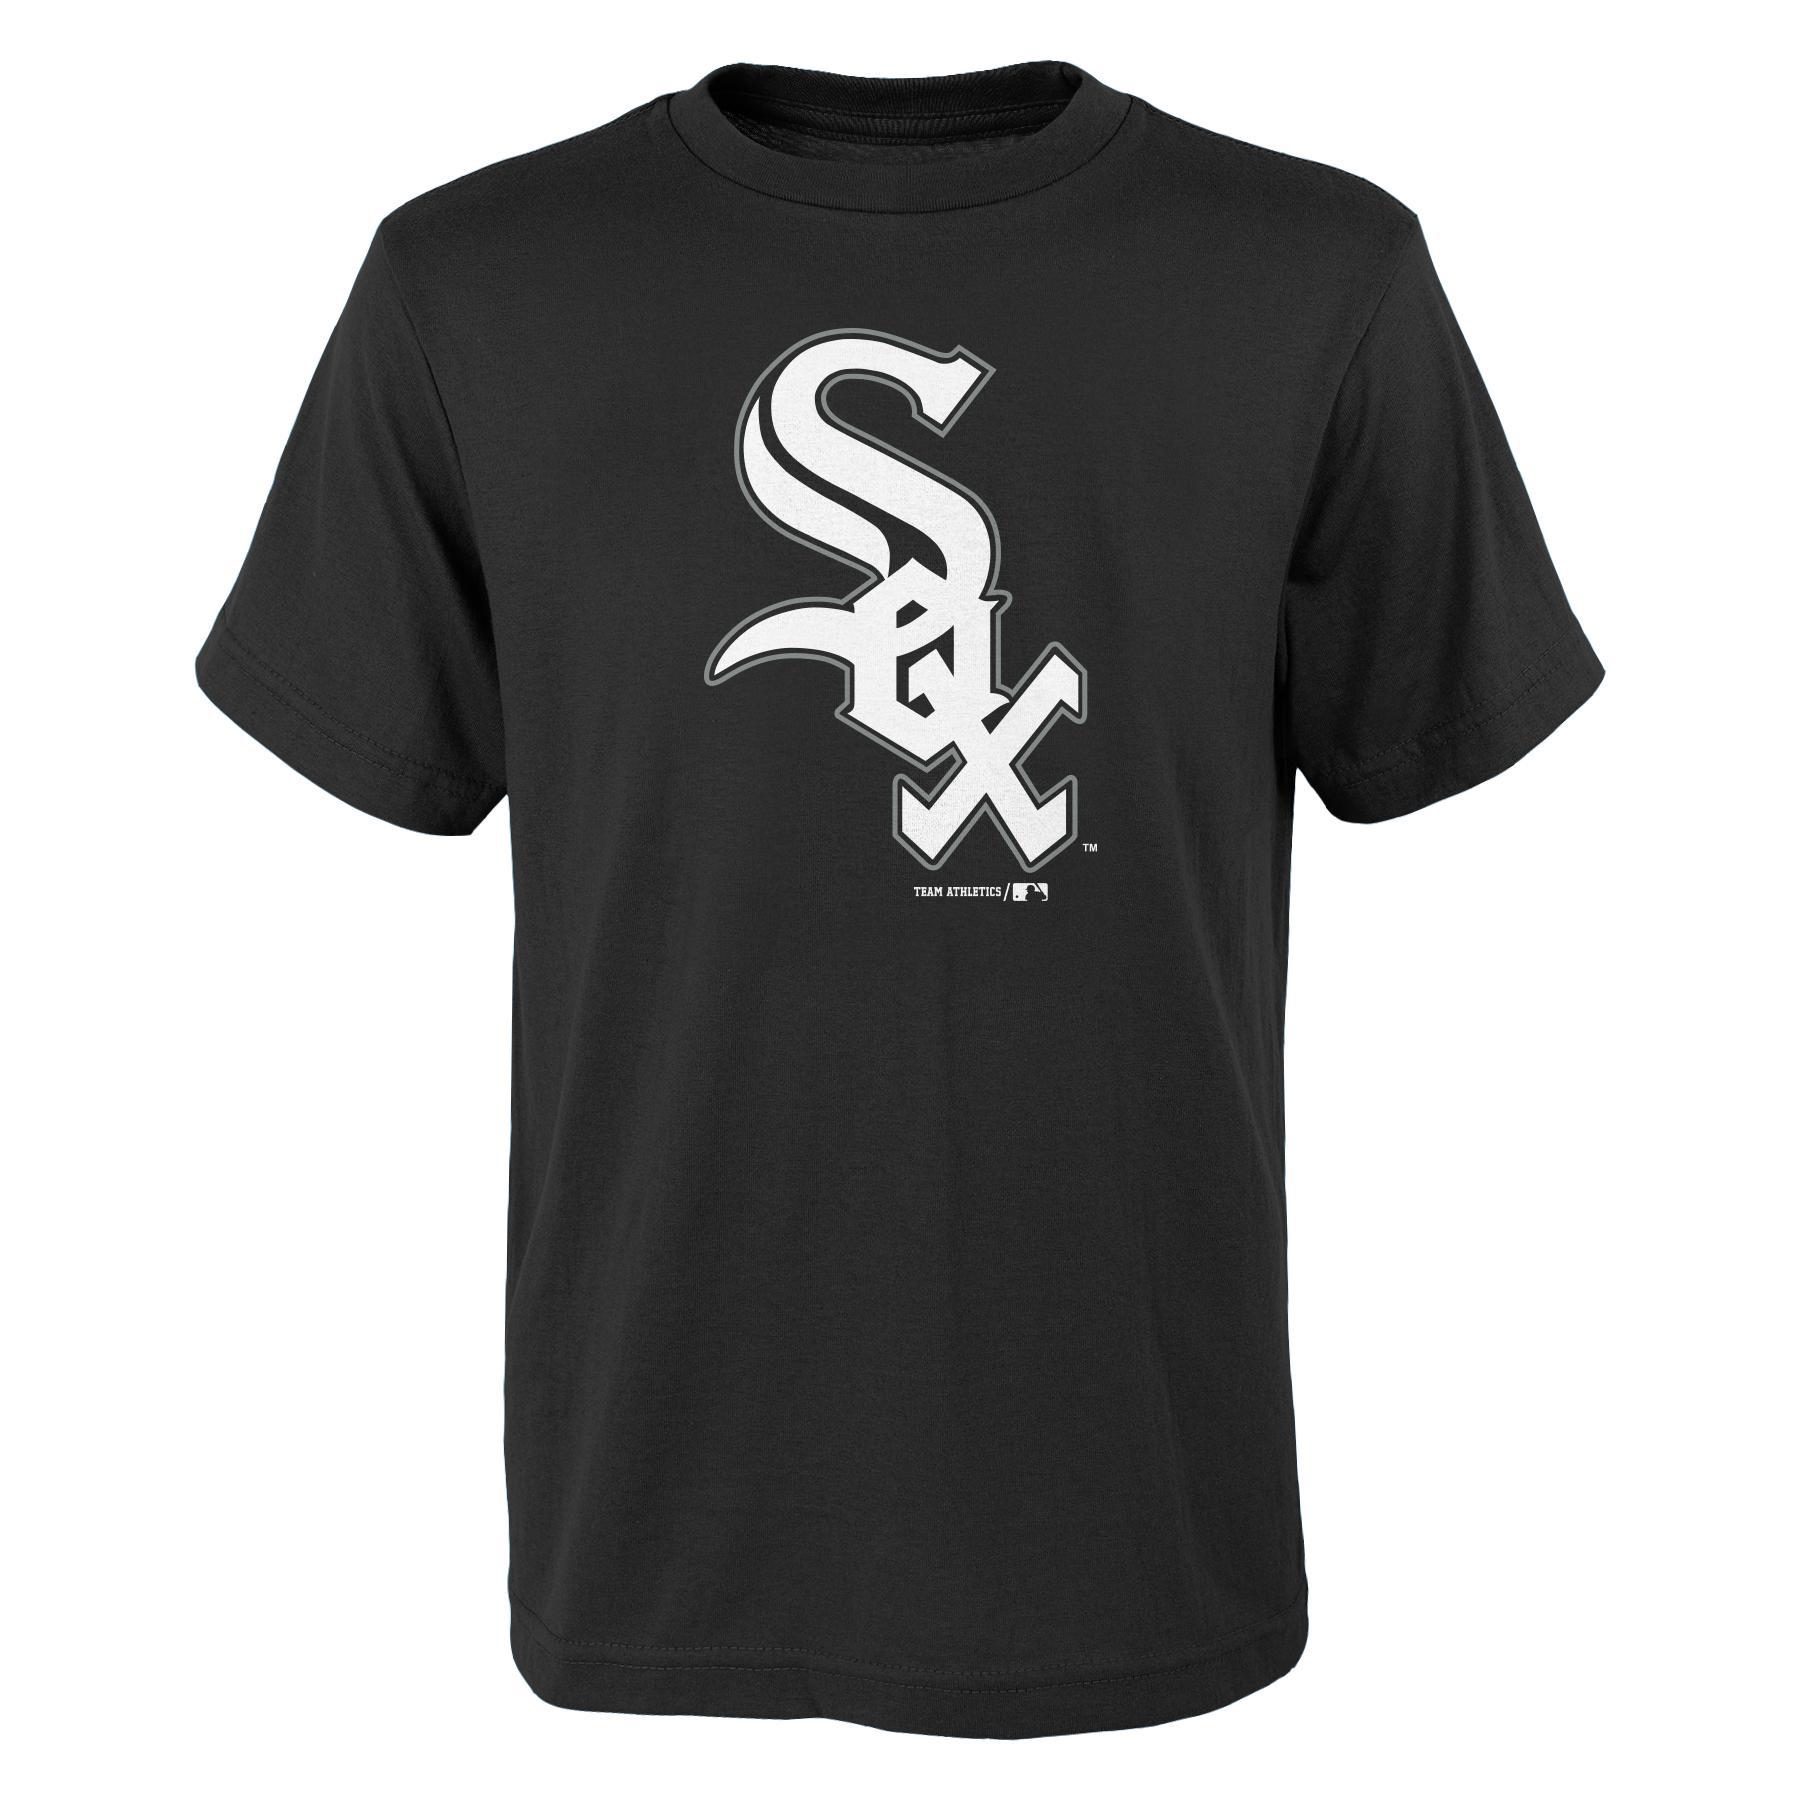 MLB Boy's Graphic T-Shirt - Chicago White Sox